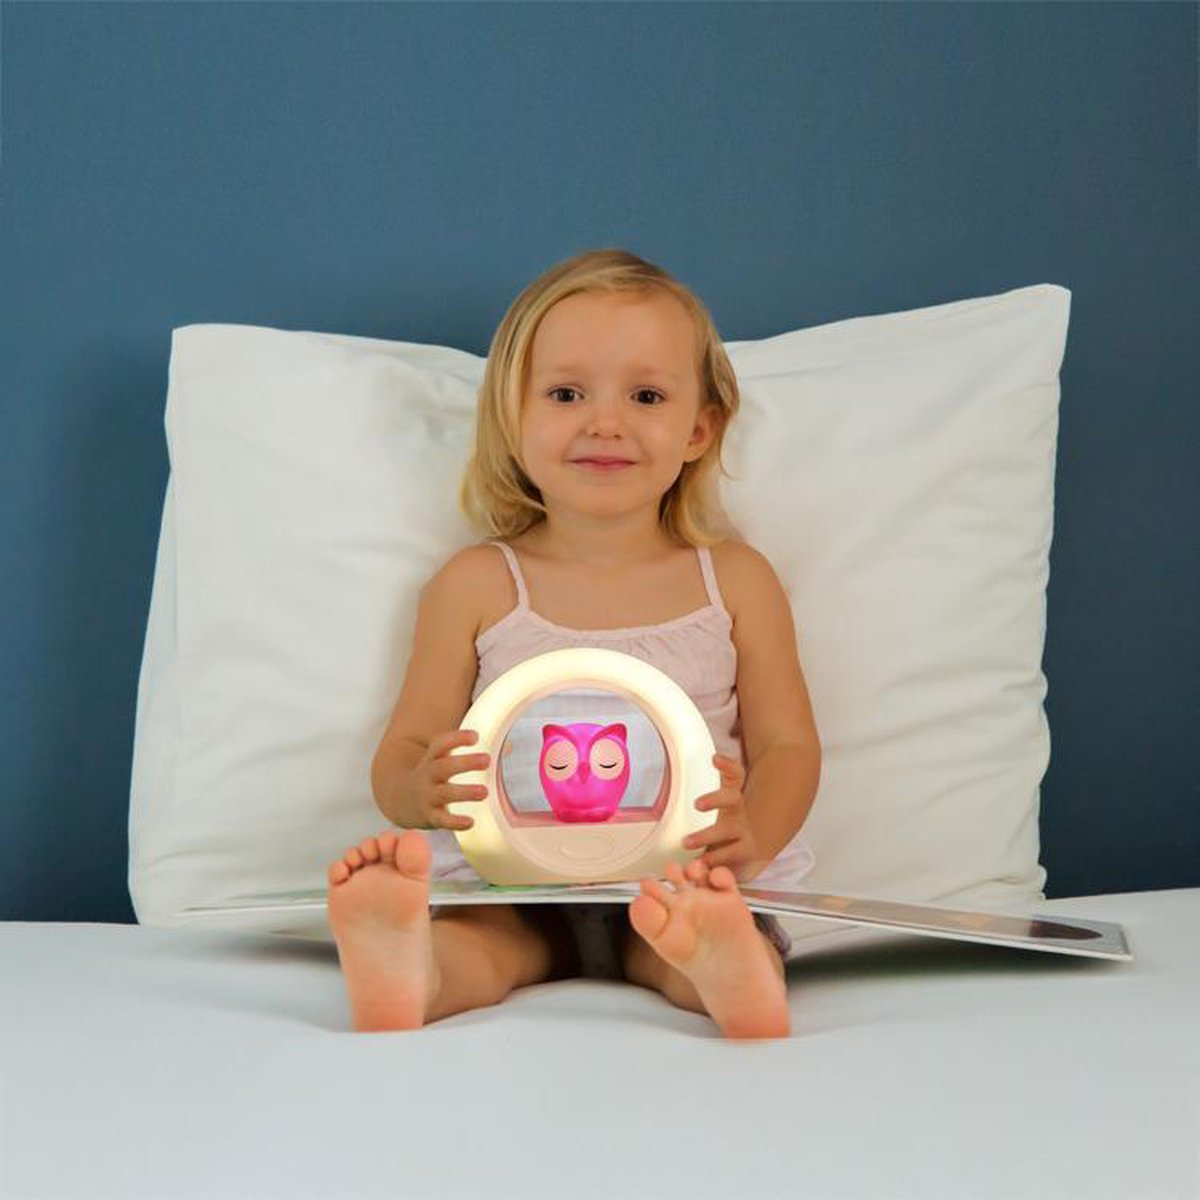 Zazu Lou Uil Nachtlampje - Roze - Kinderlamp met geluidsensor en nachtlamp functie | bol.com